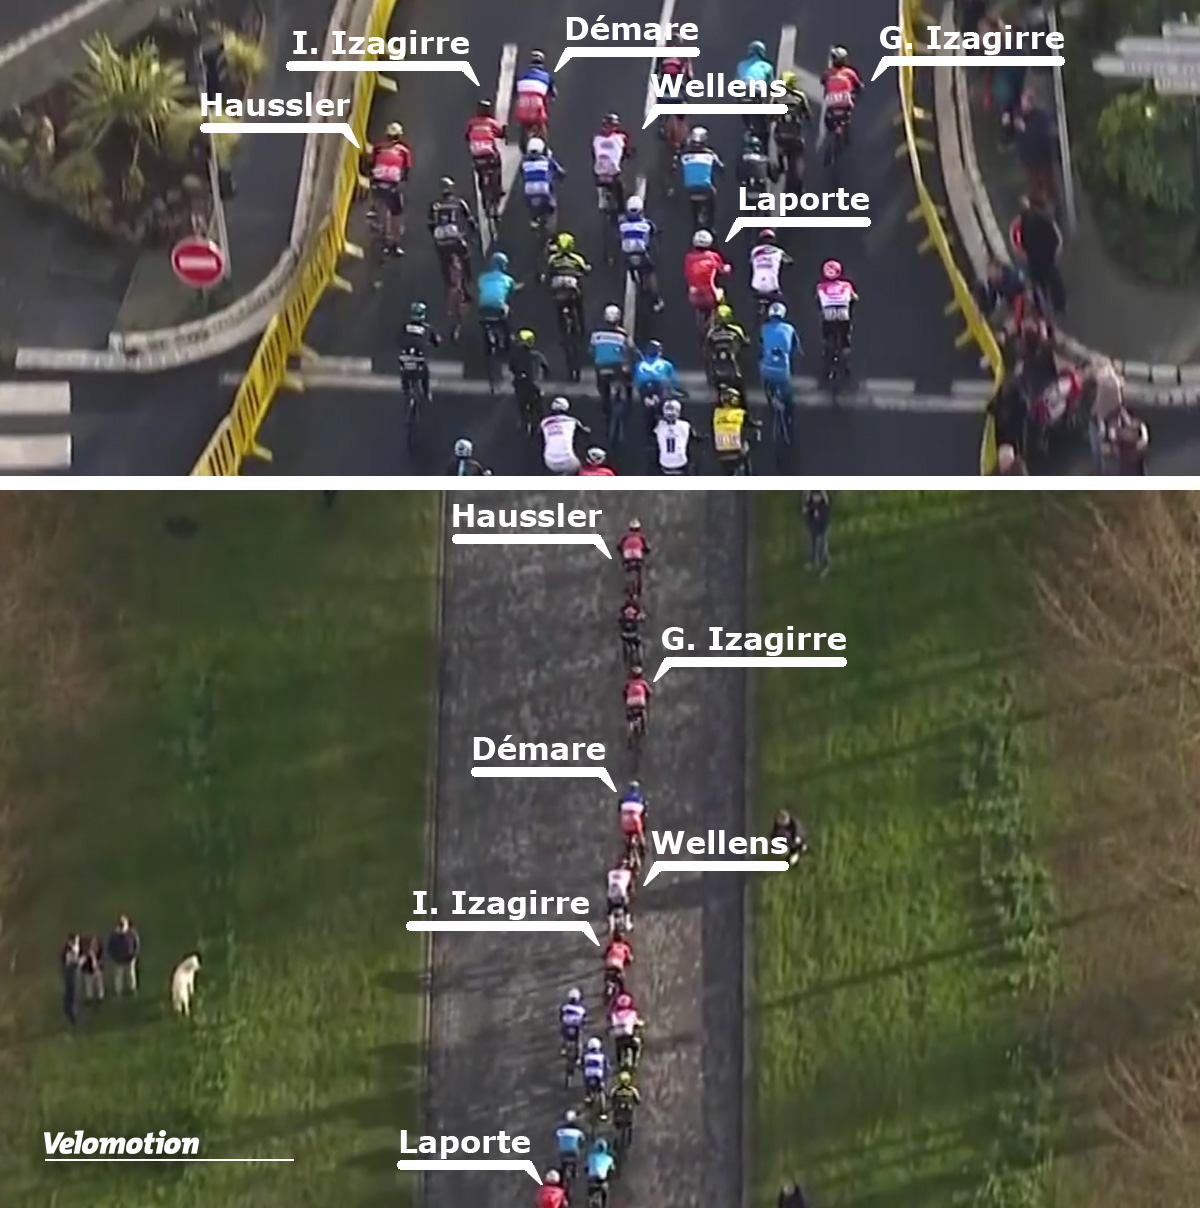 Radsport Analyse Taktik Demare Paris-Nizza